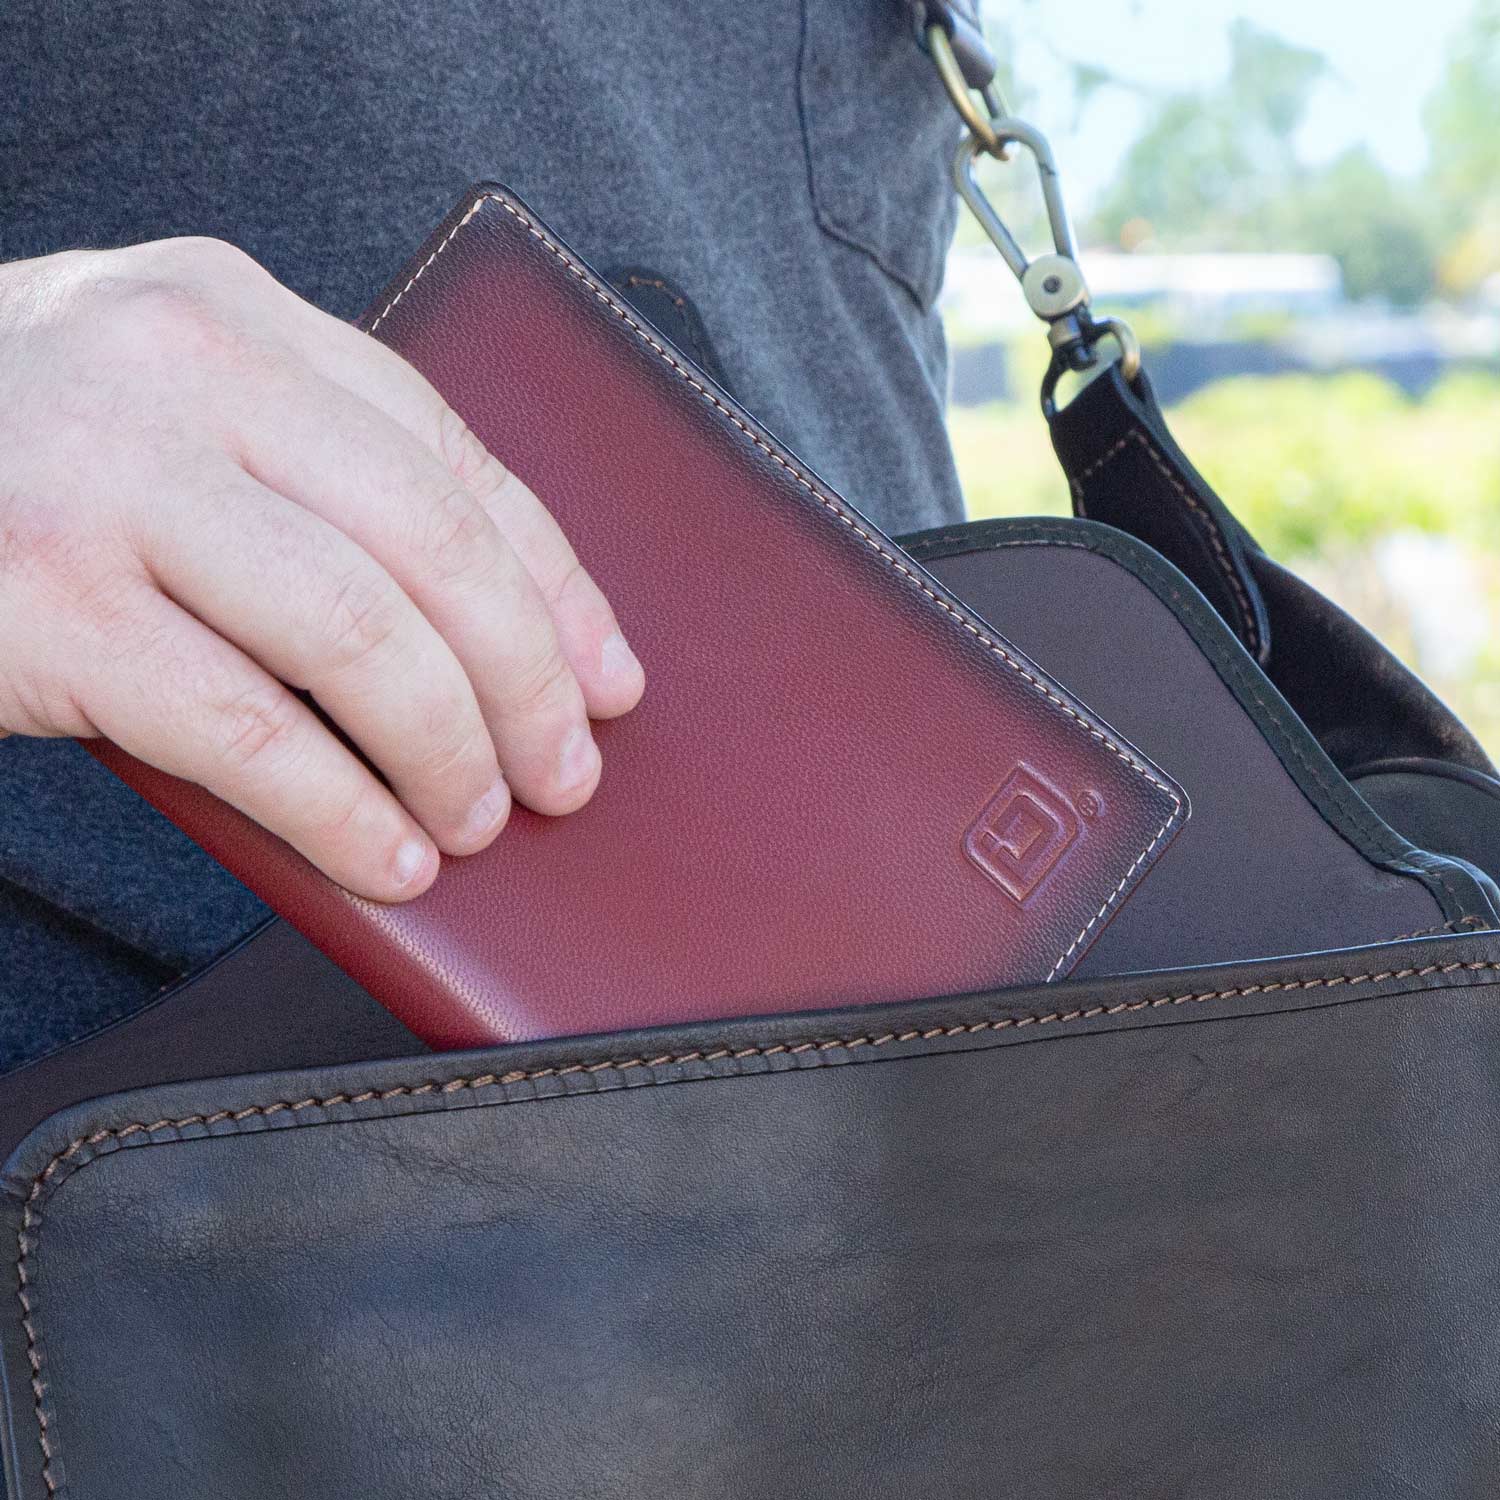 RFID Blocking Leather Passport Wallet